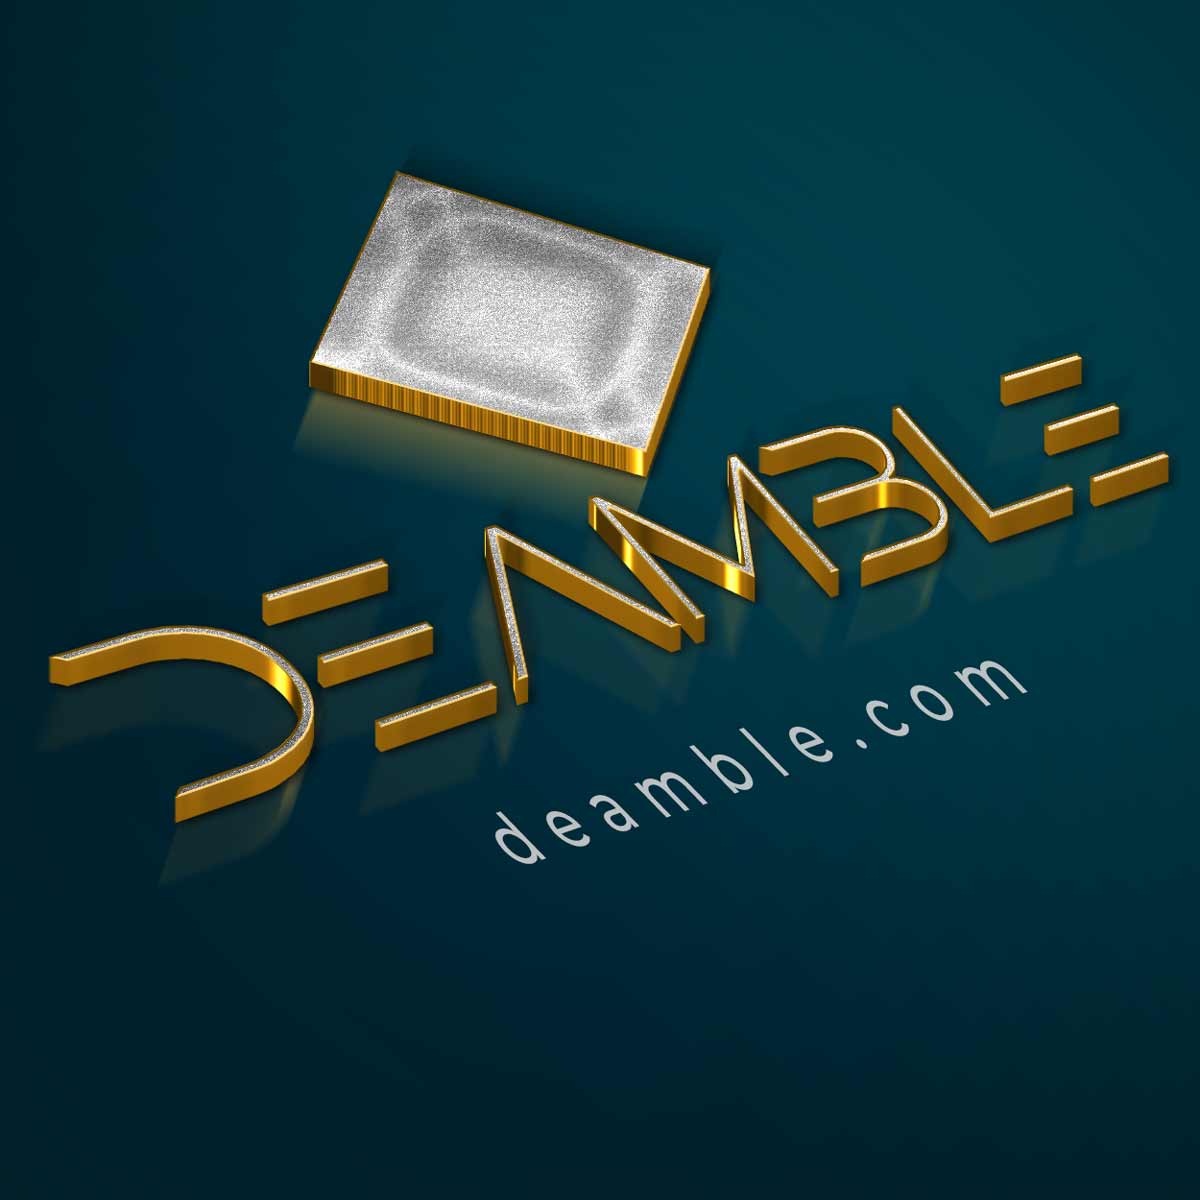 Deamble.com - Branding Design for sale